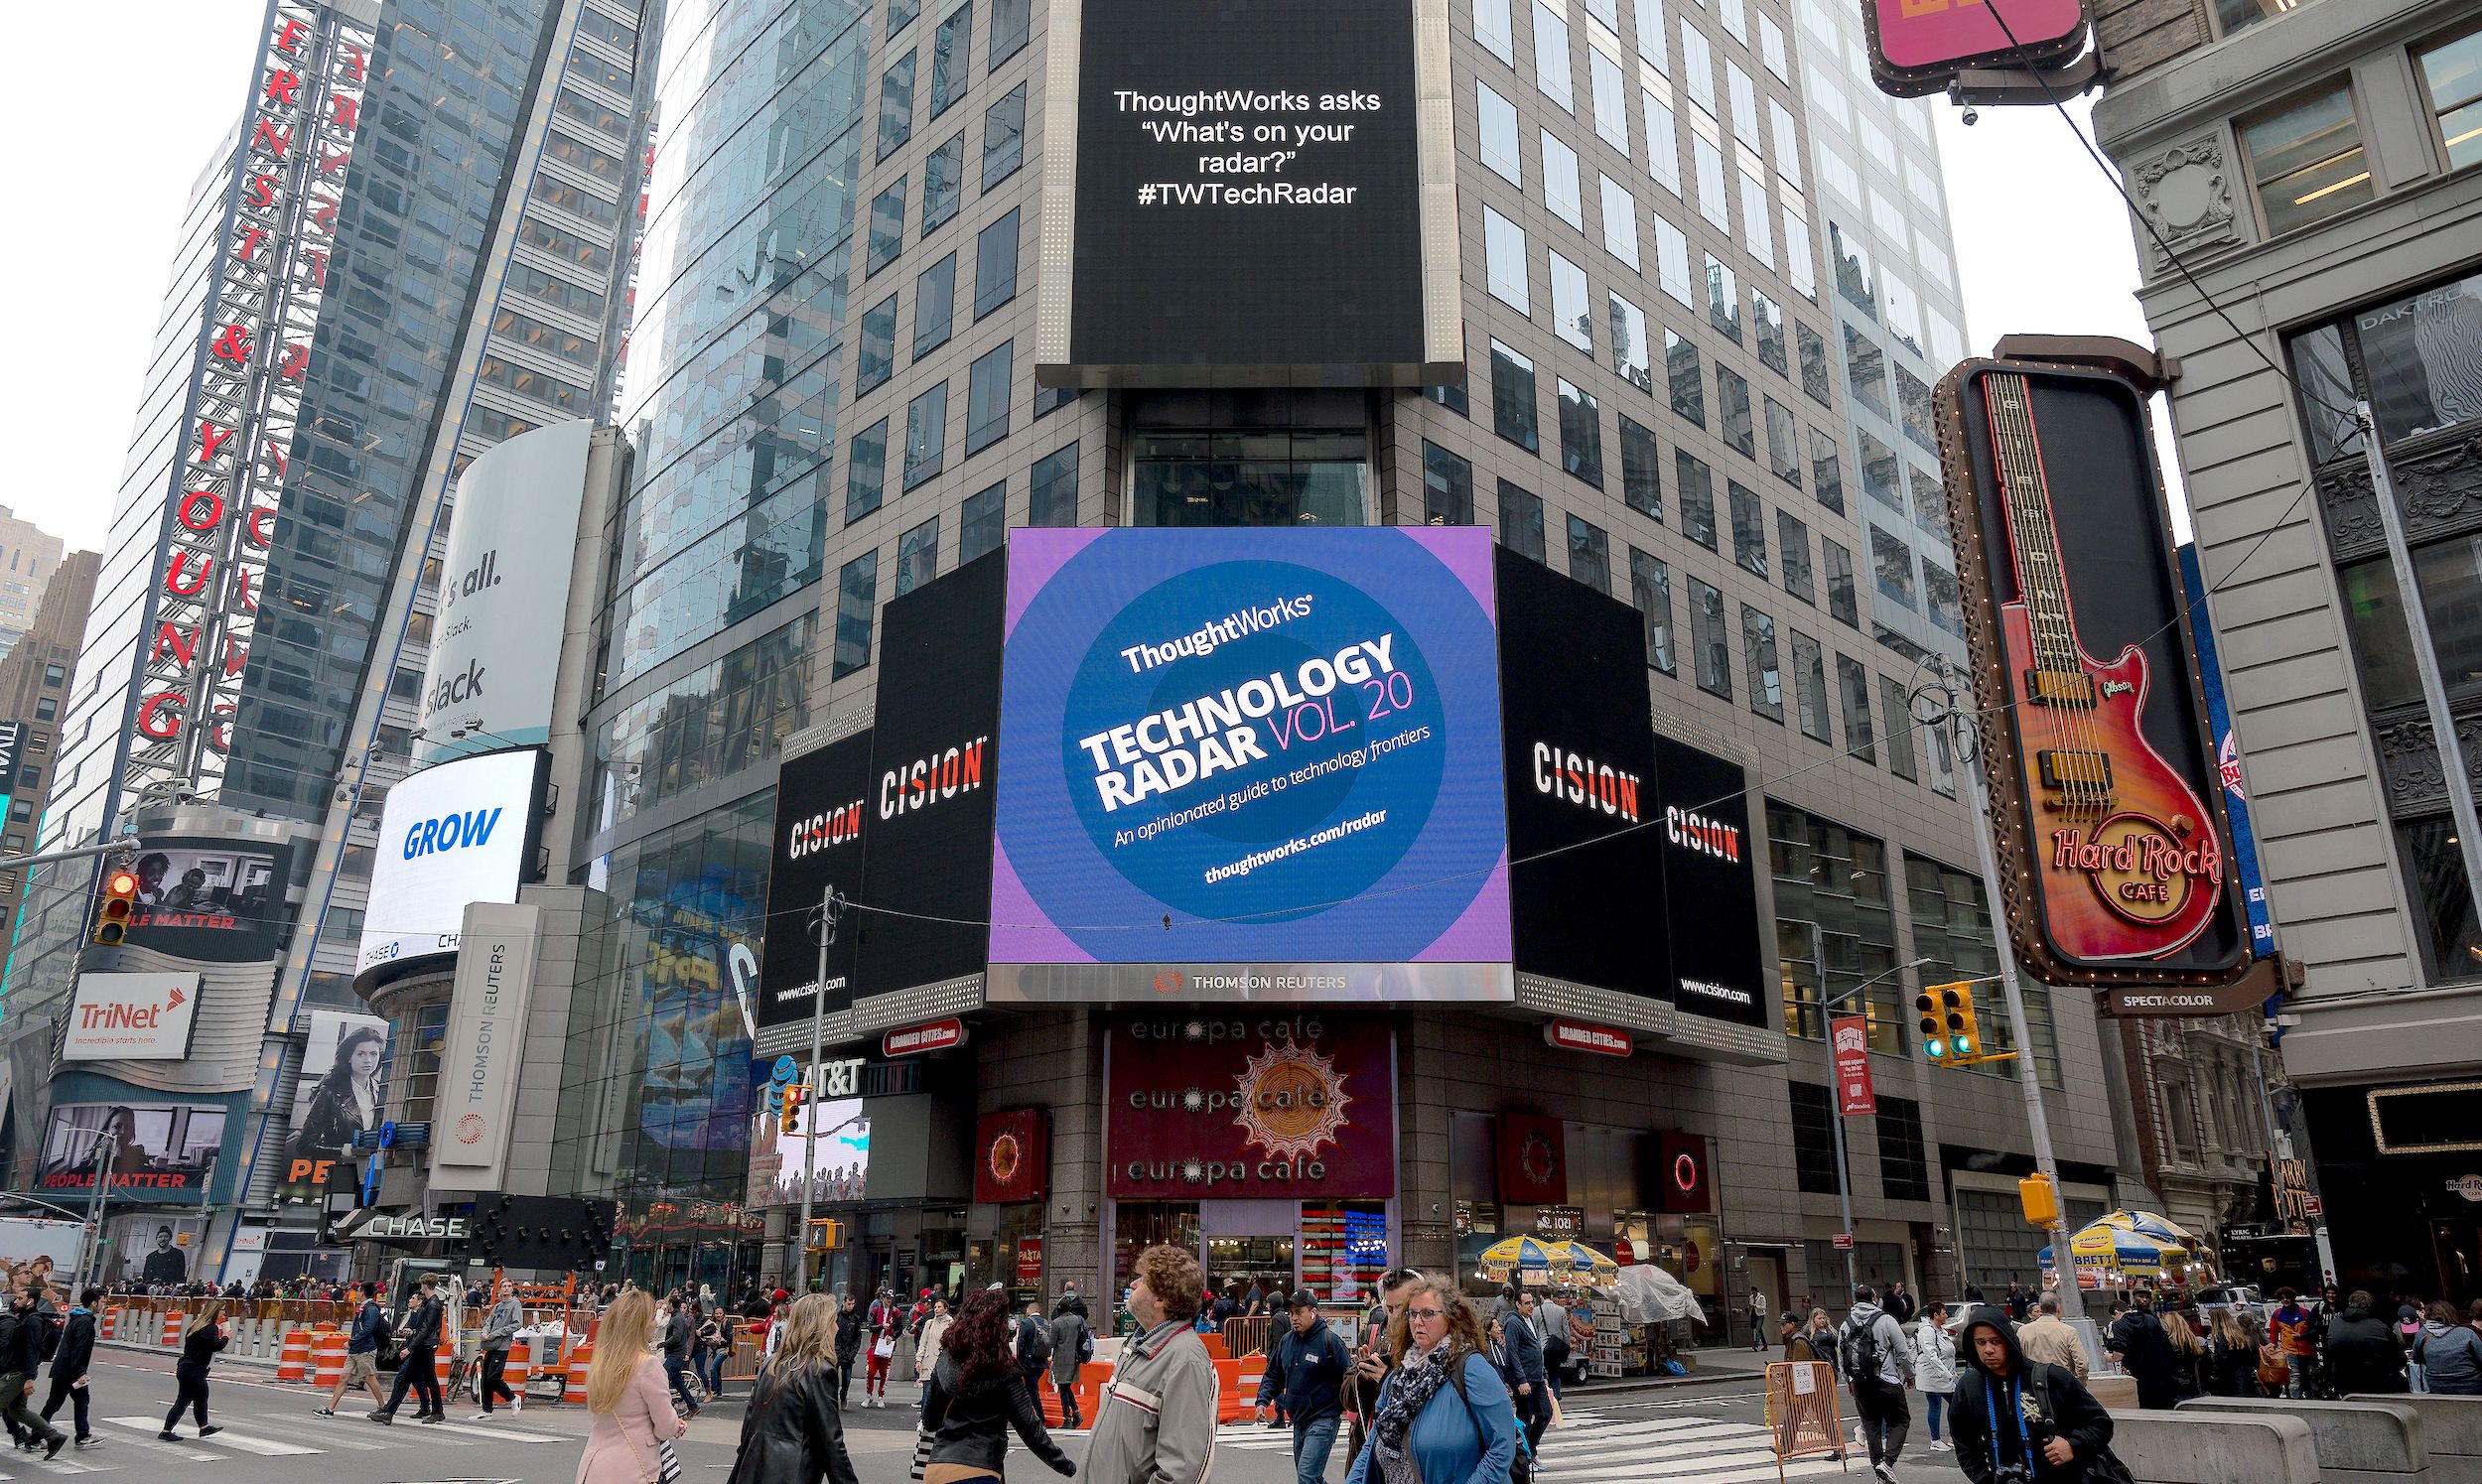 Volume 20 billboard in Times Square, New York